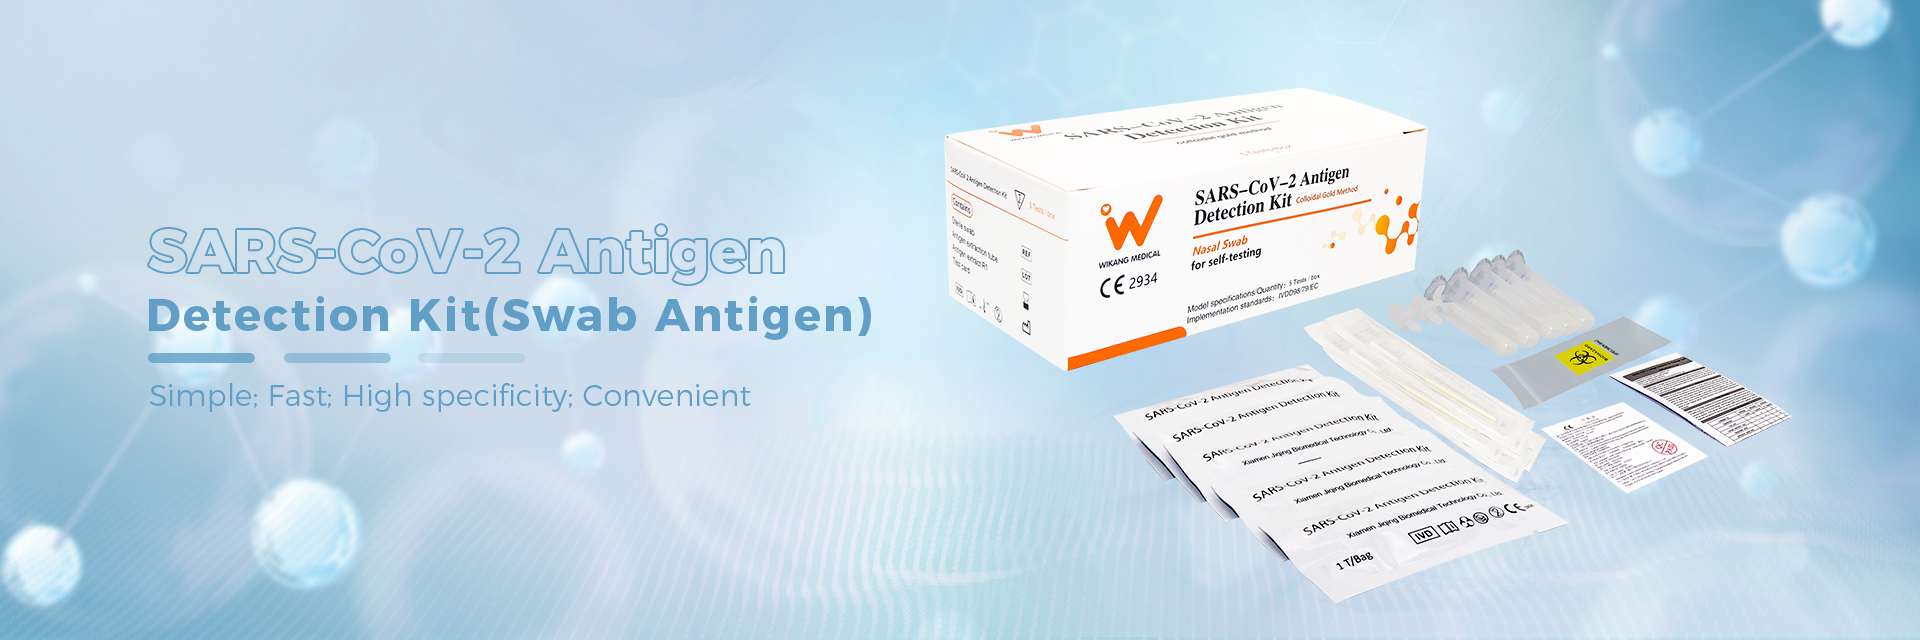 SARS-CoV-2 Antigen Detection Kit(Swab Antigen)